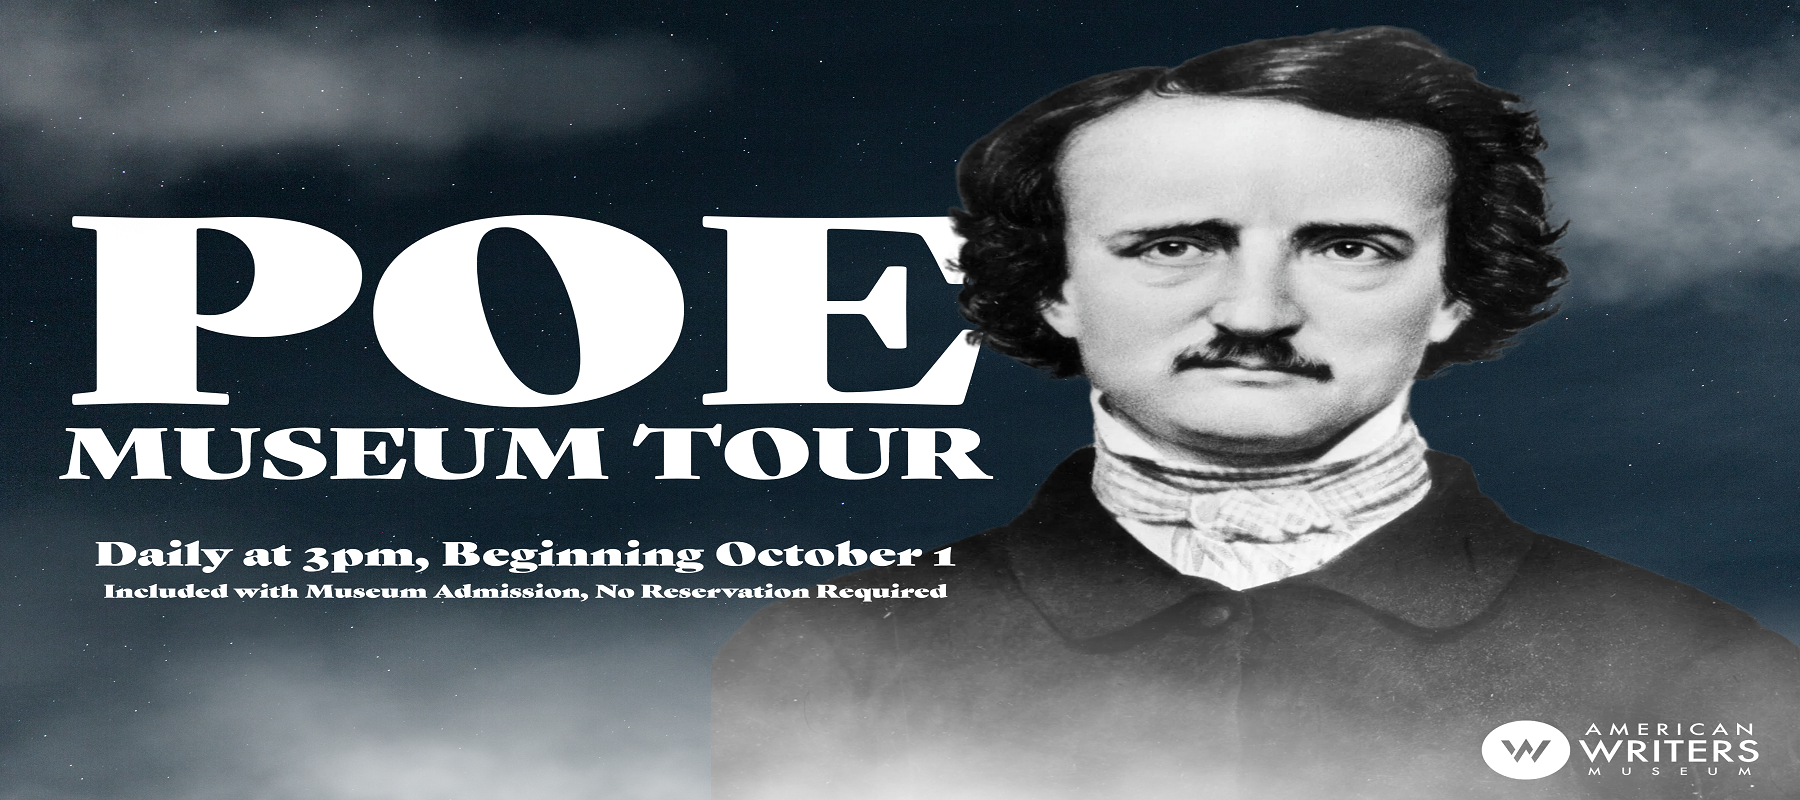 Edgar Allan Poe Tours